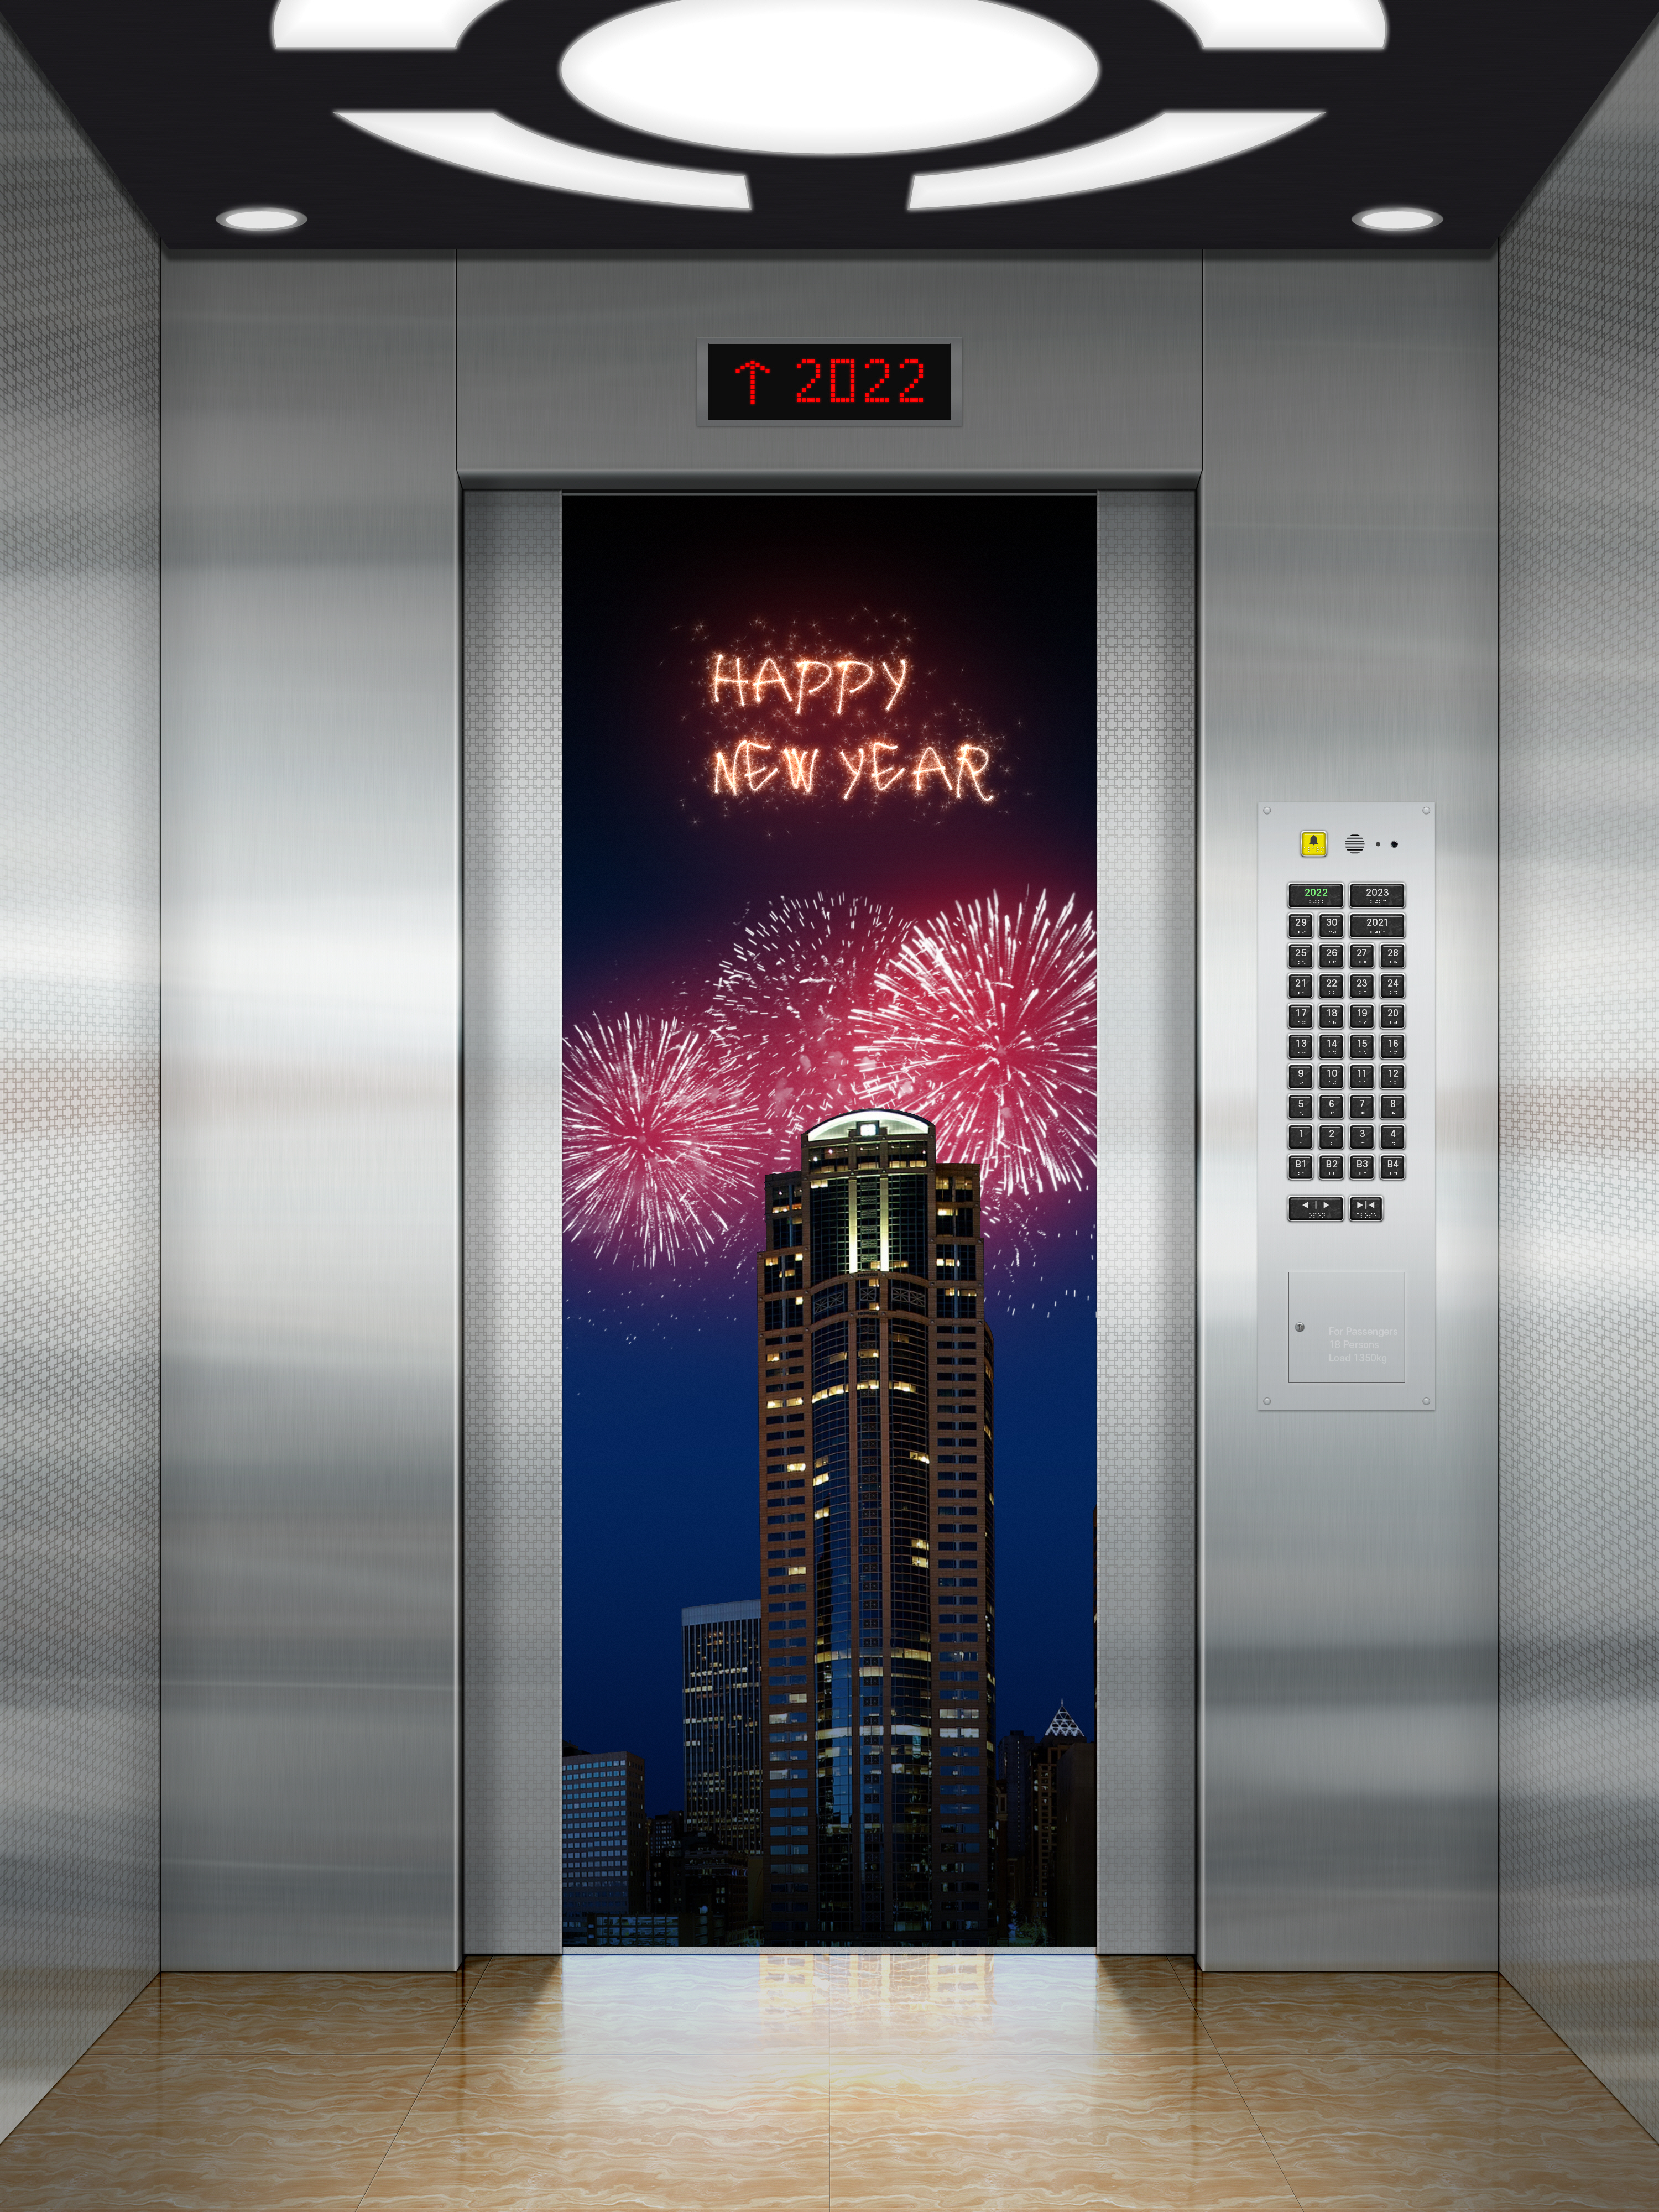 General 3000x4000 elevator typography New Year fireworks digital art portrait display